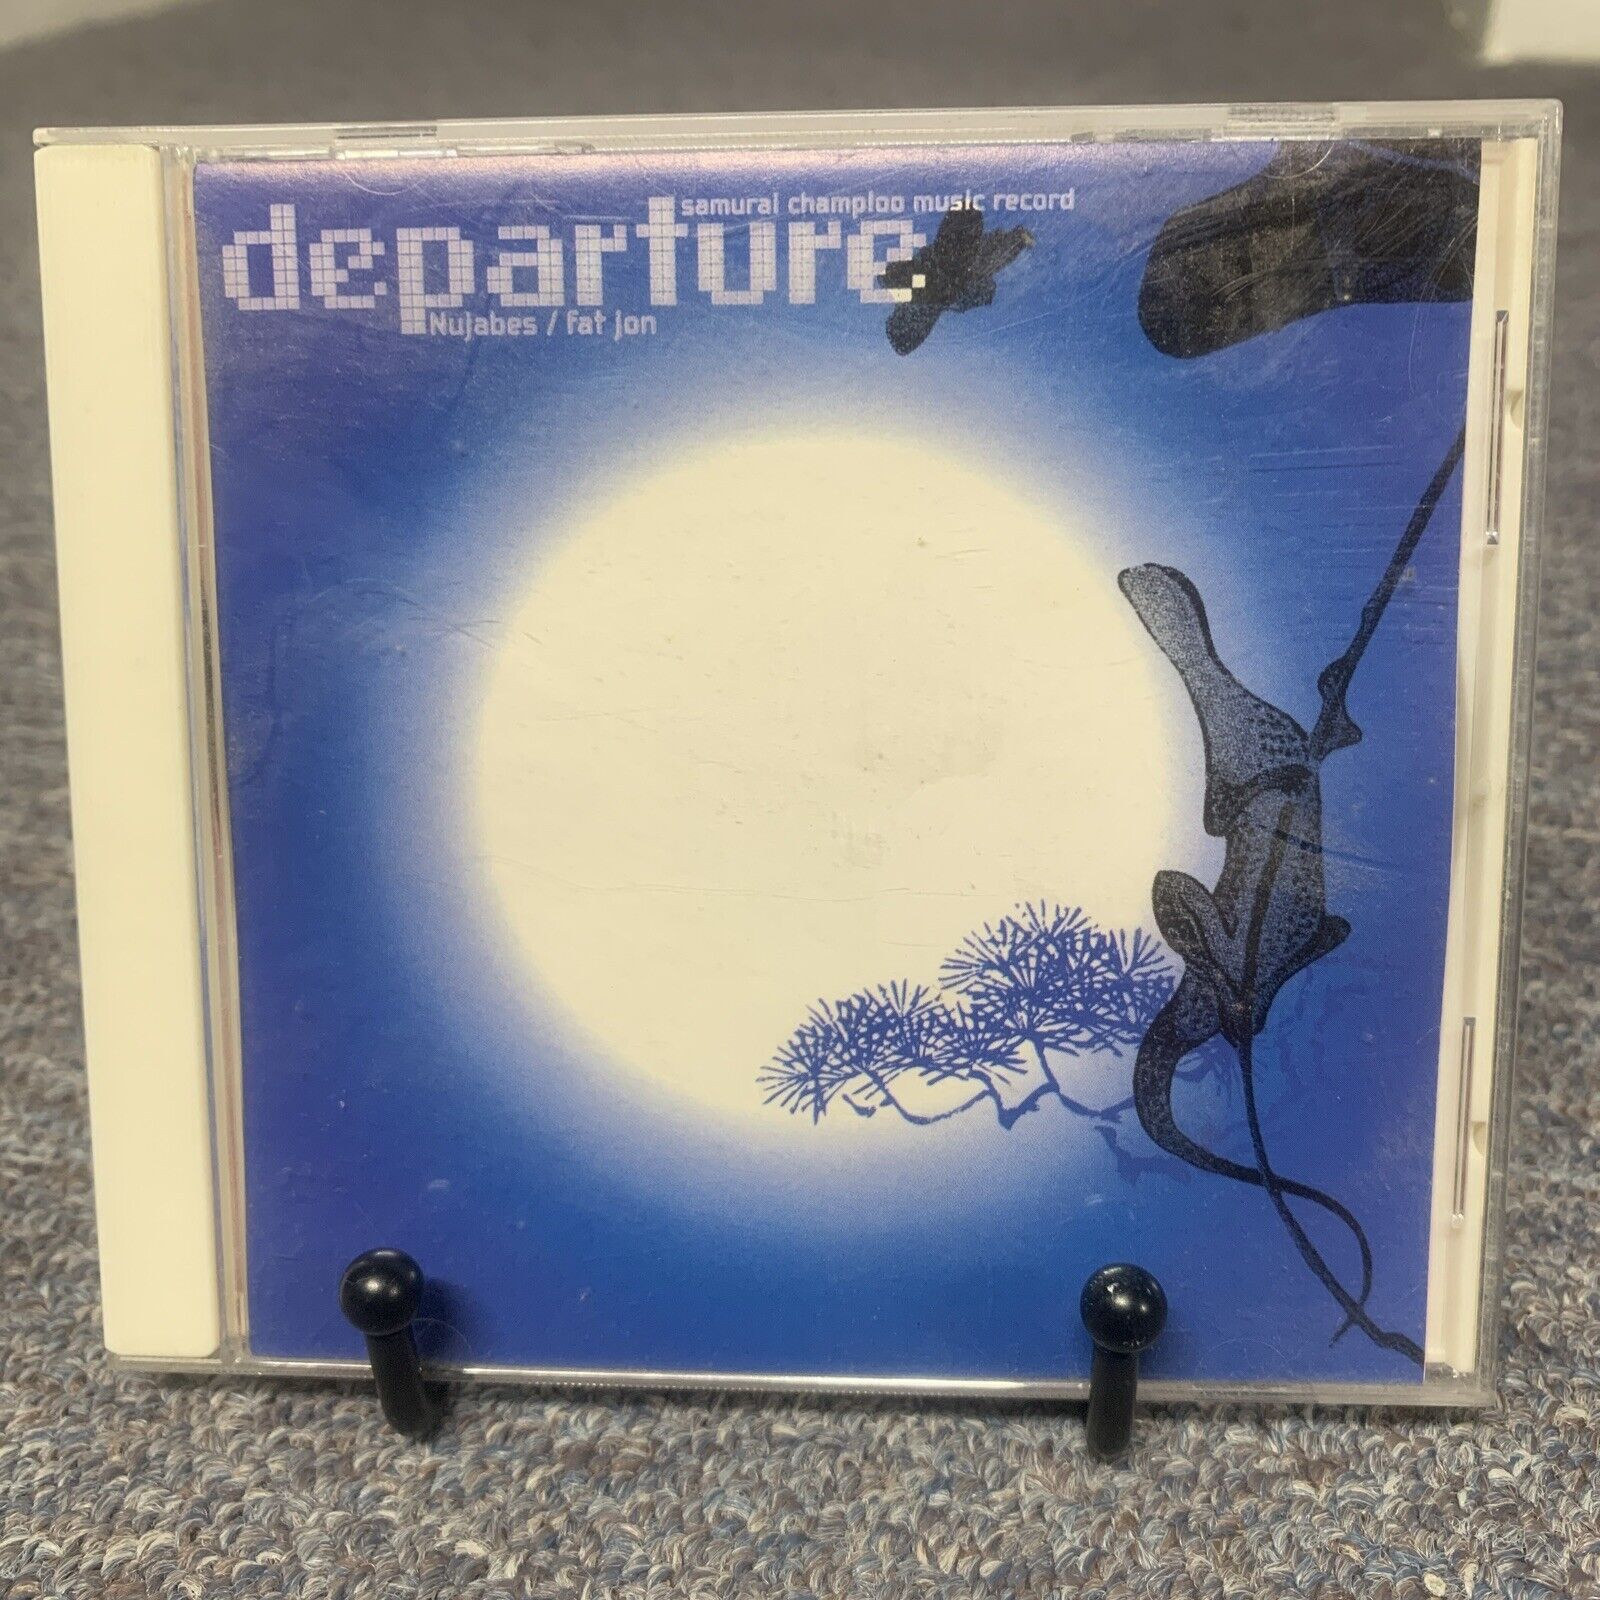 Nujabes / Fat Jon - Samurai Champloo Music Record - Departure OST Music Album CD